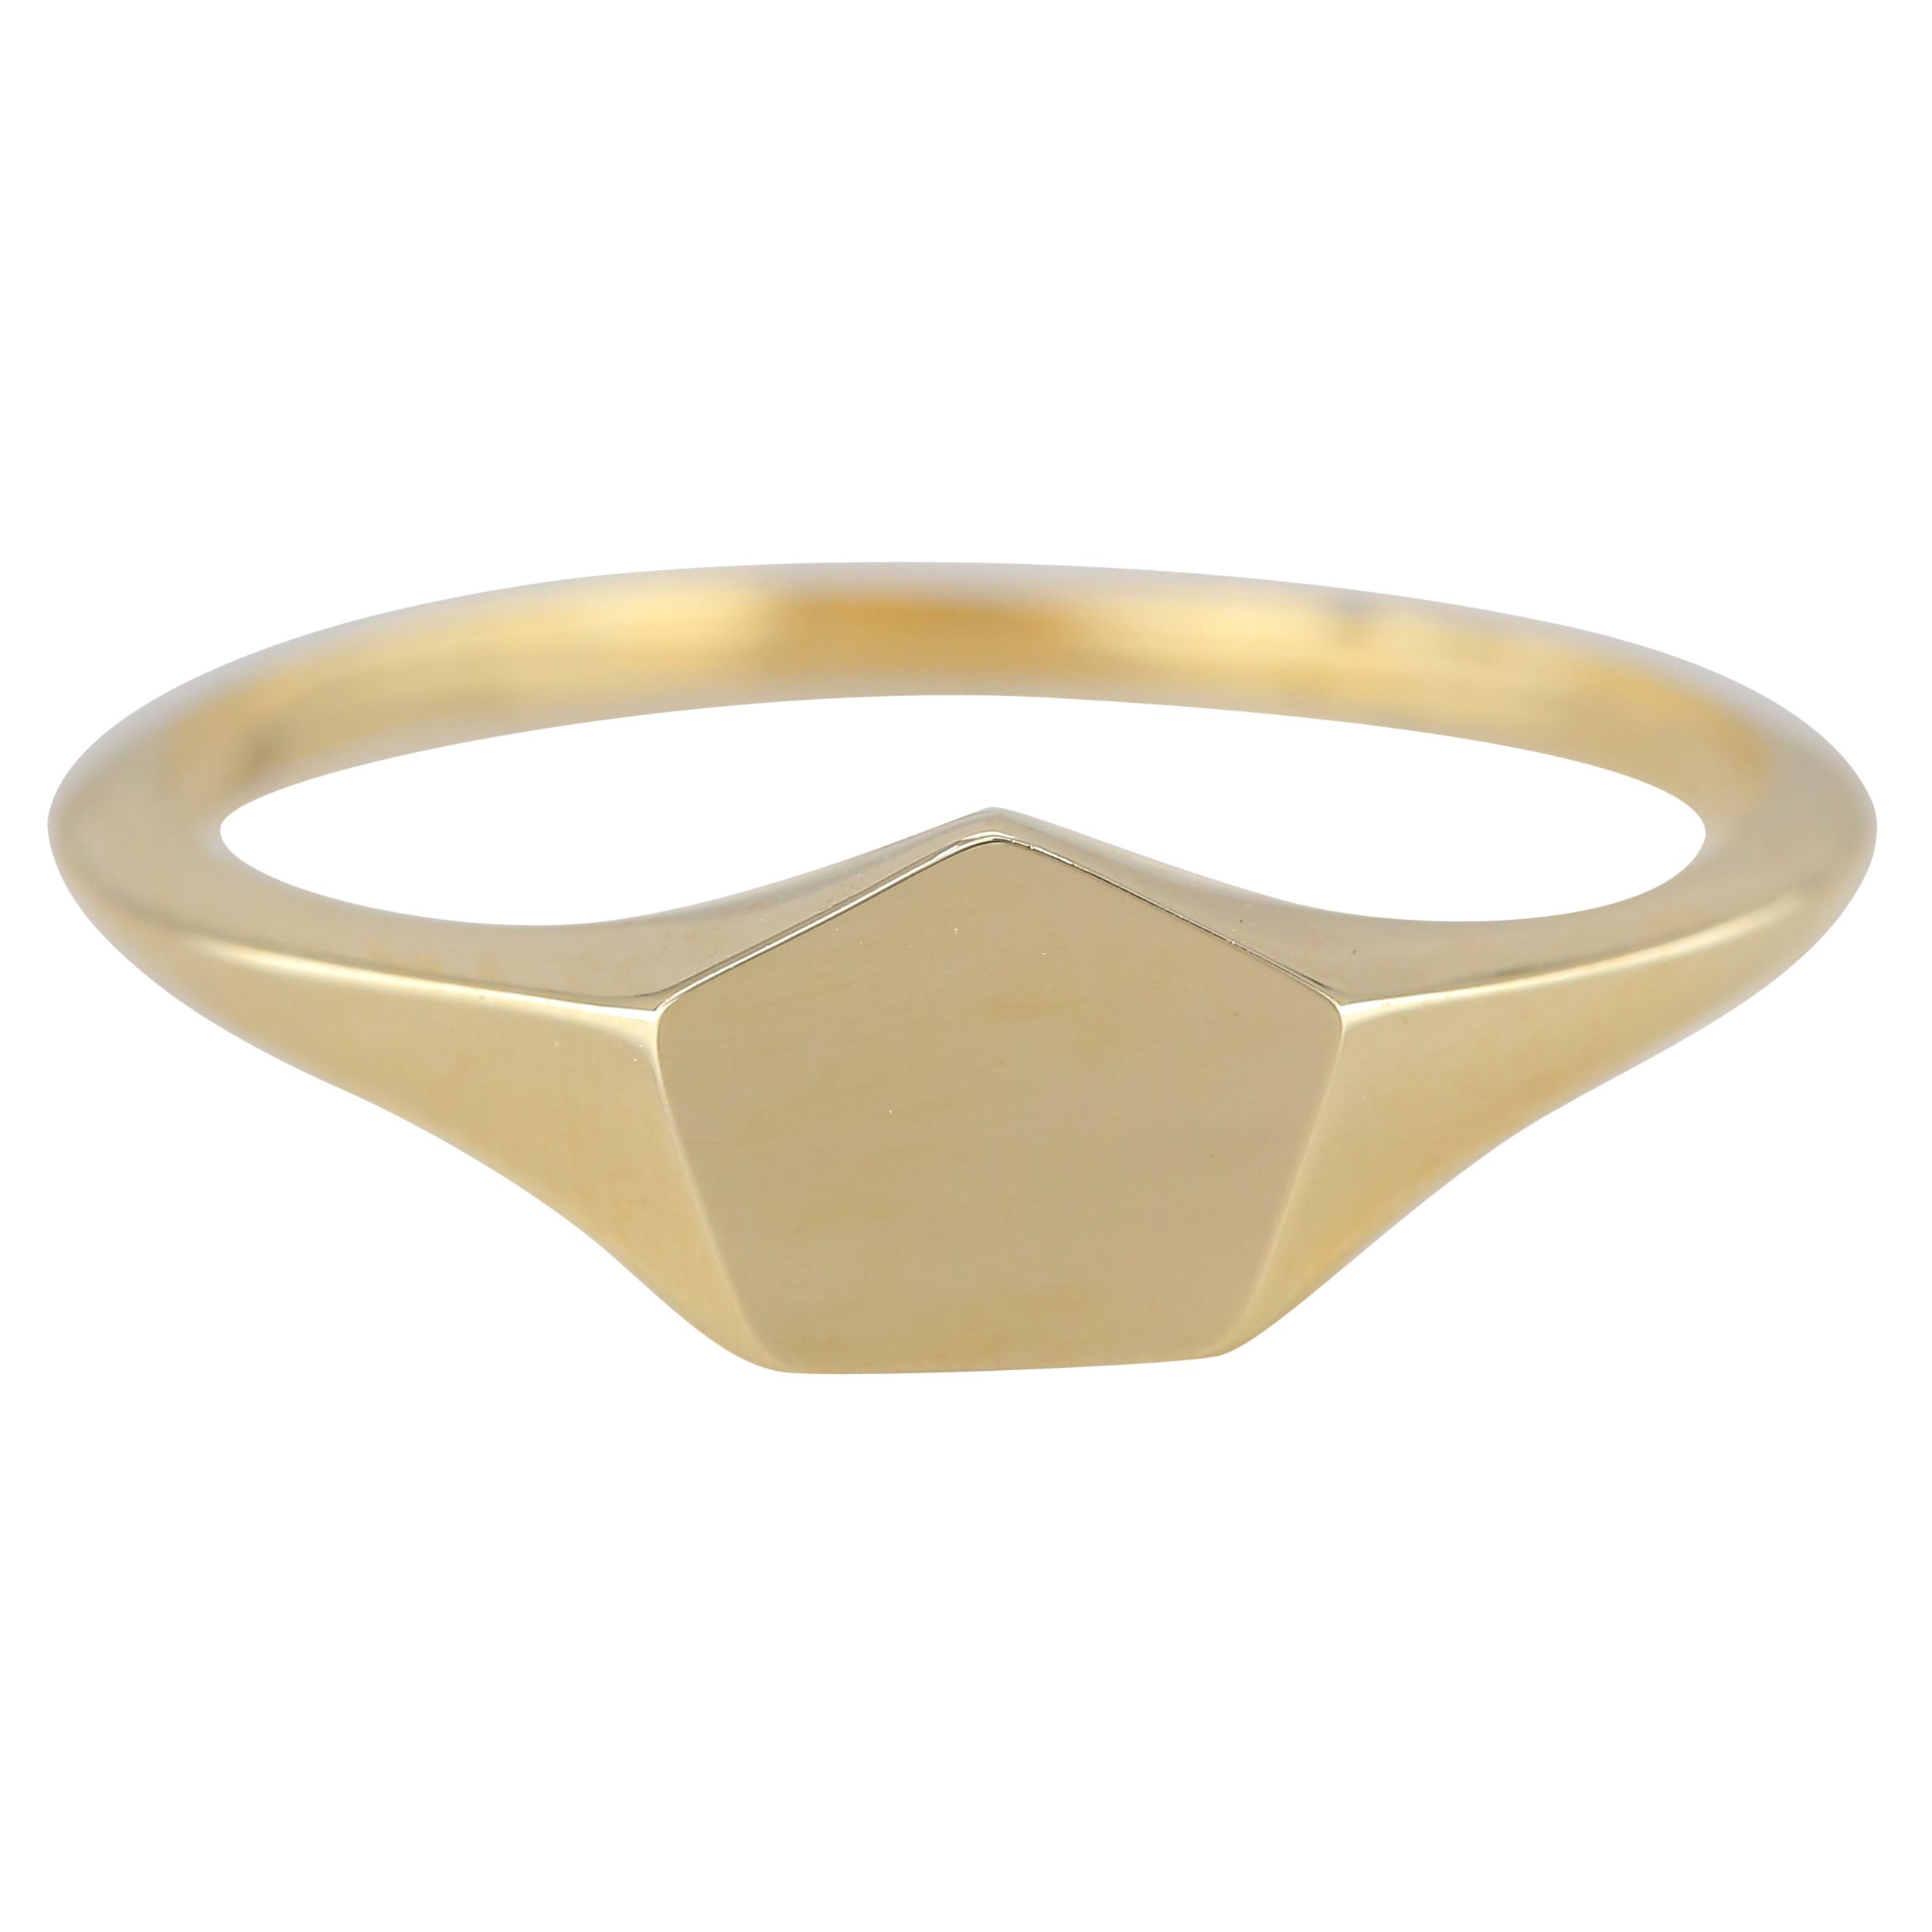 Im Angebot: Rosay Siegelring, 14K Gold Rosay Pentagon Siegelring, kleiner Pentagonal Ring ()